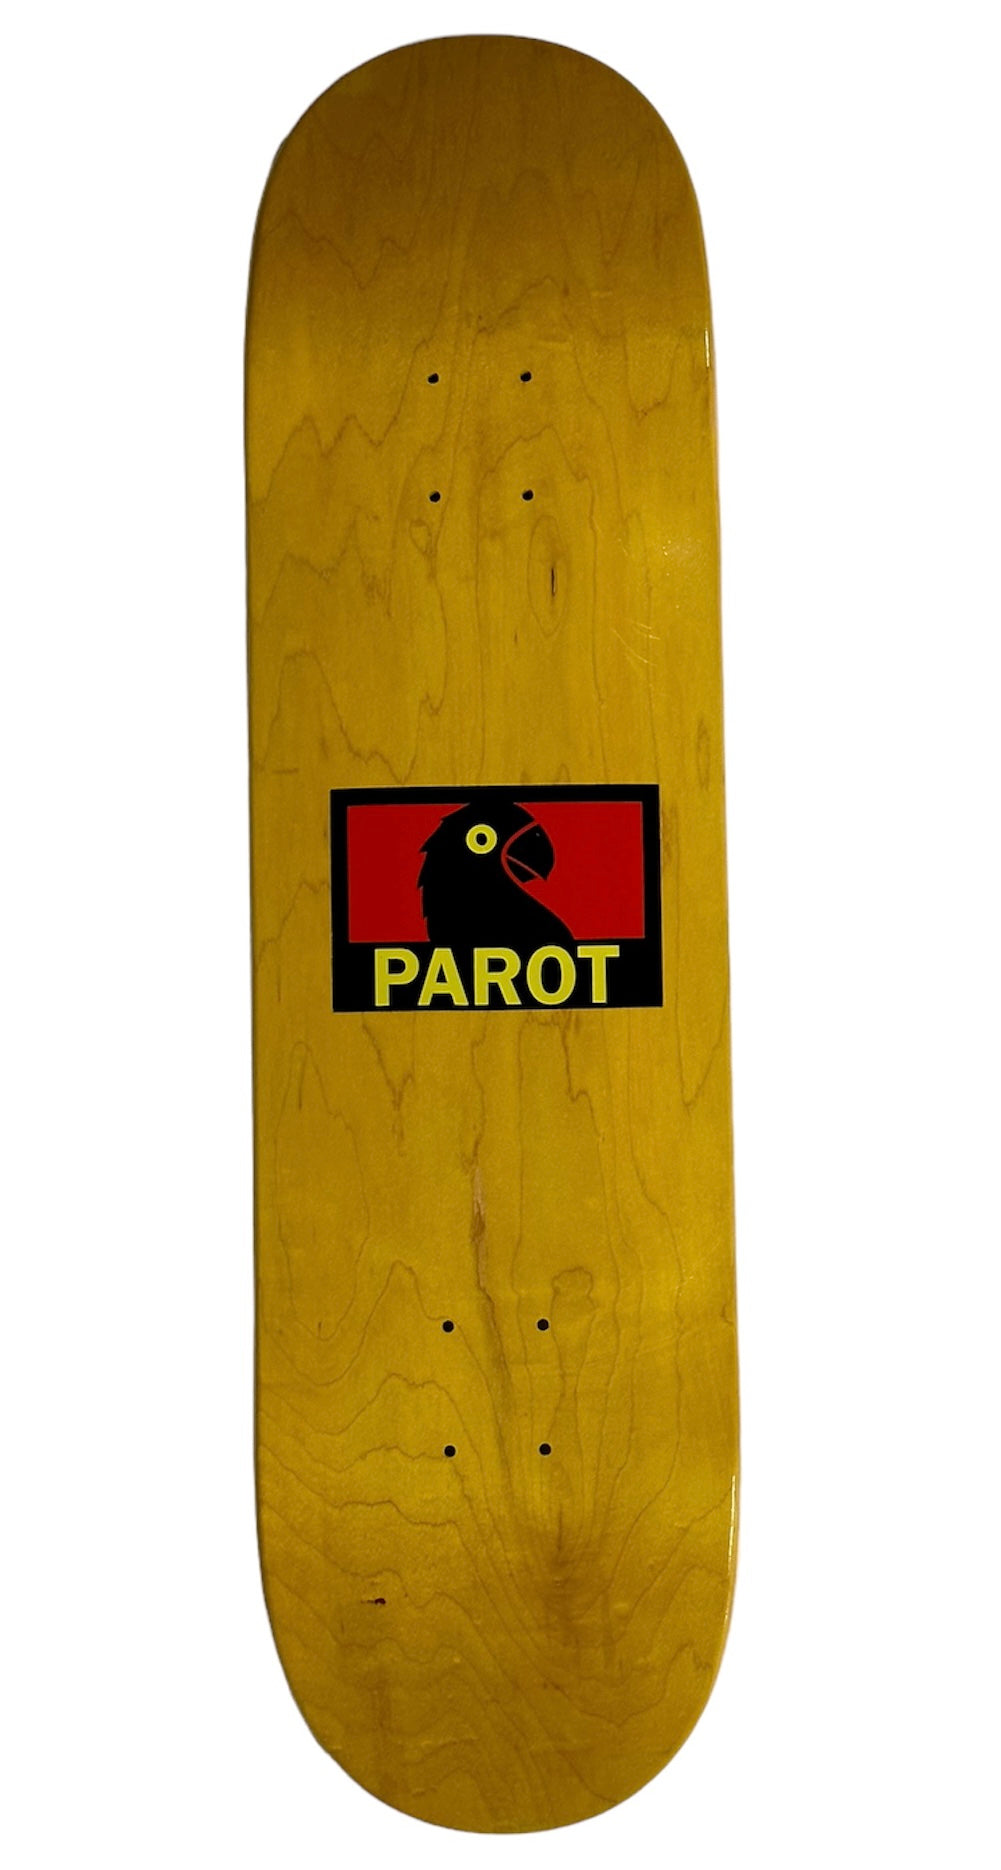 Parot deck